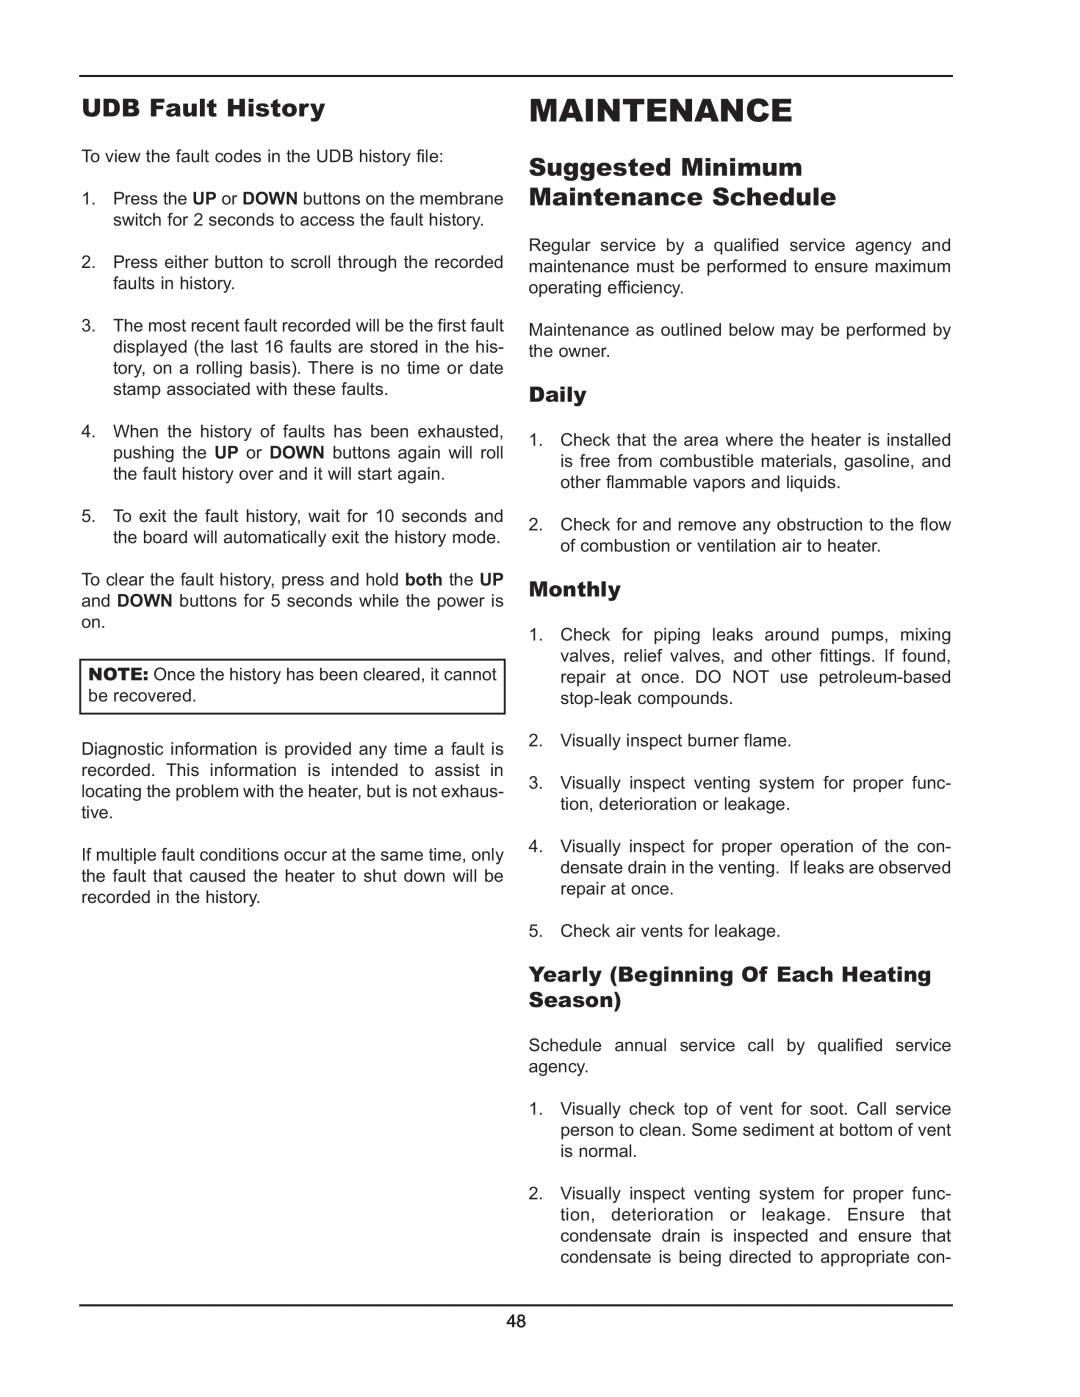 Raypak 503-2003 manual UDB Fault History, Suggested Minimum Maintenance Schedule 